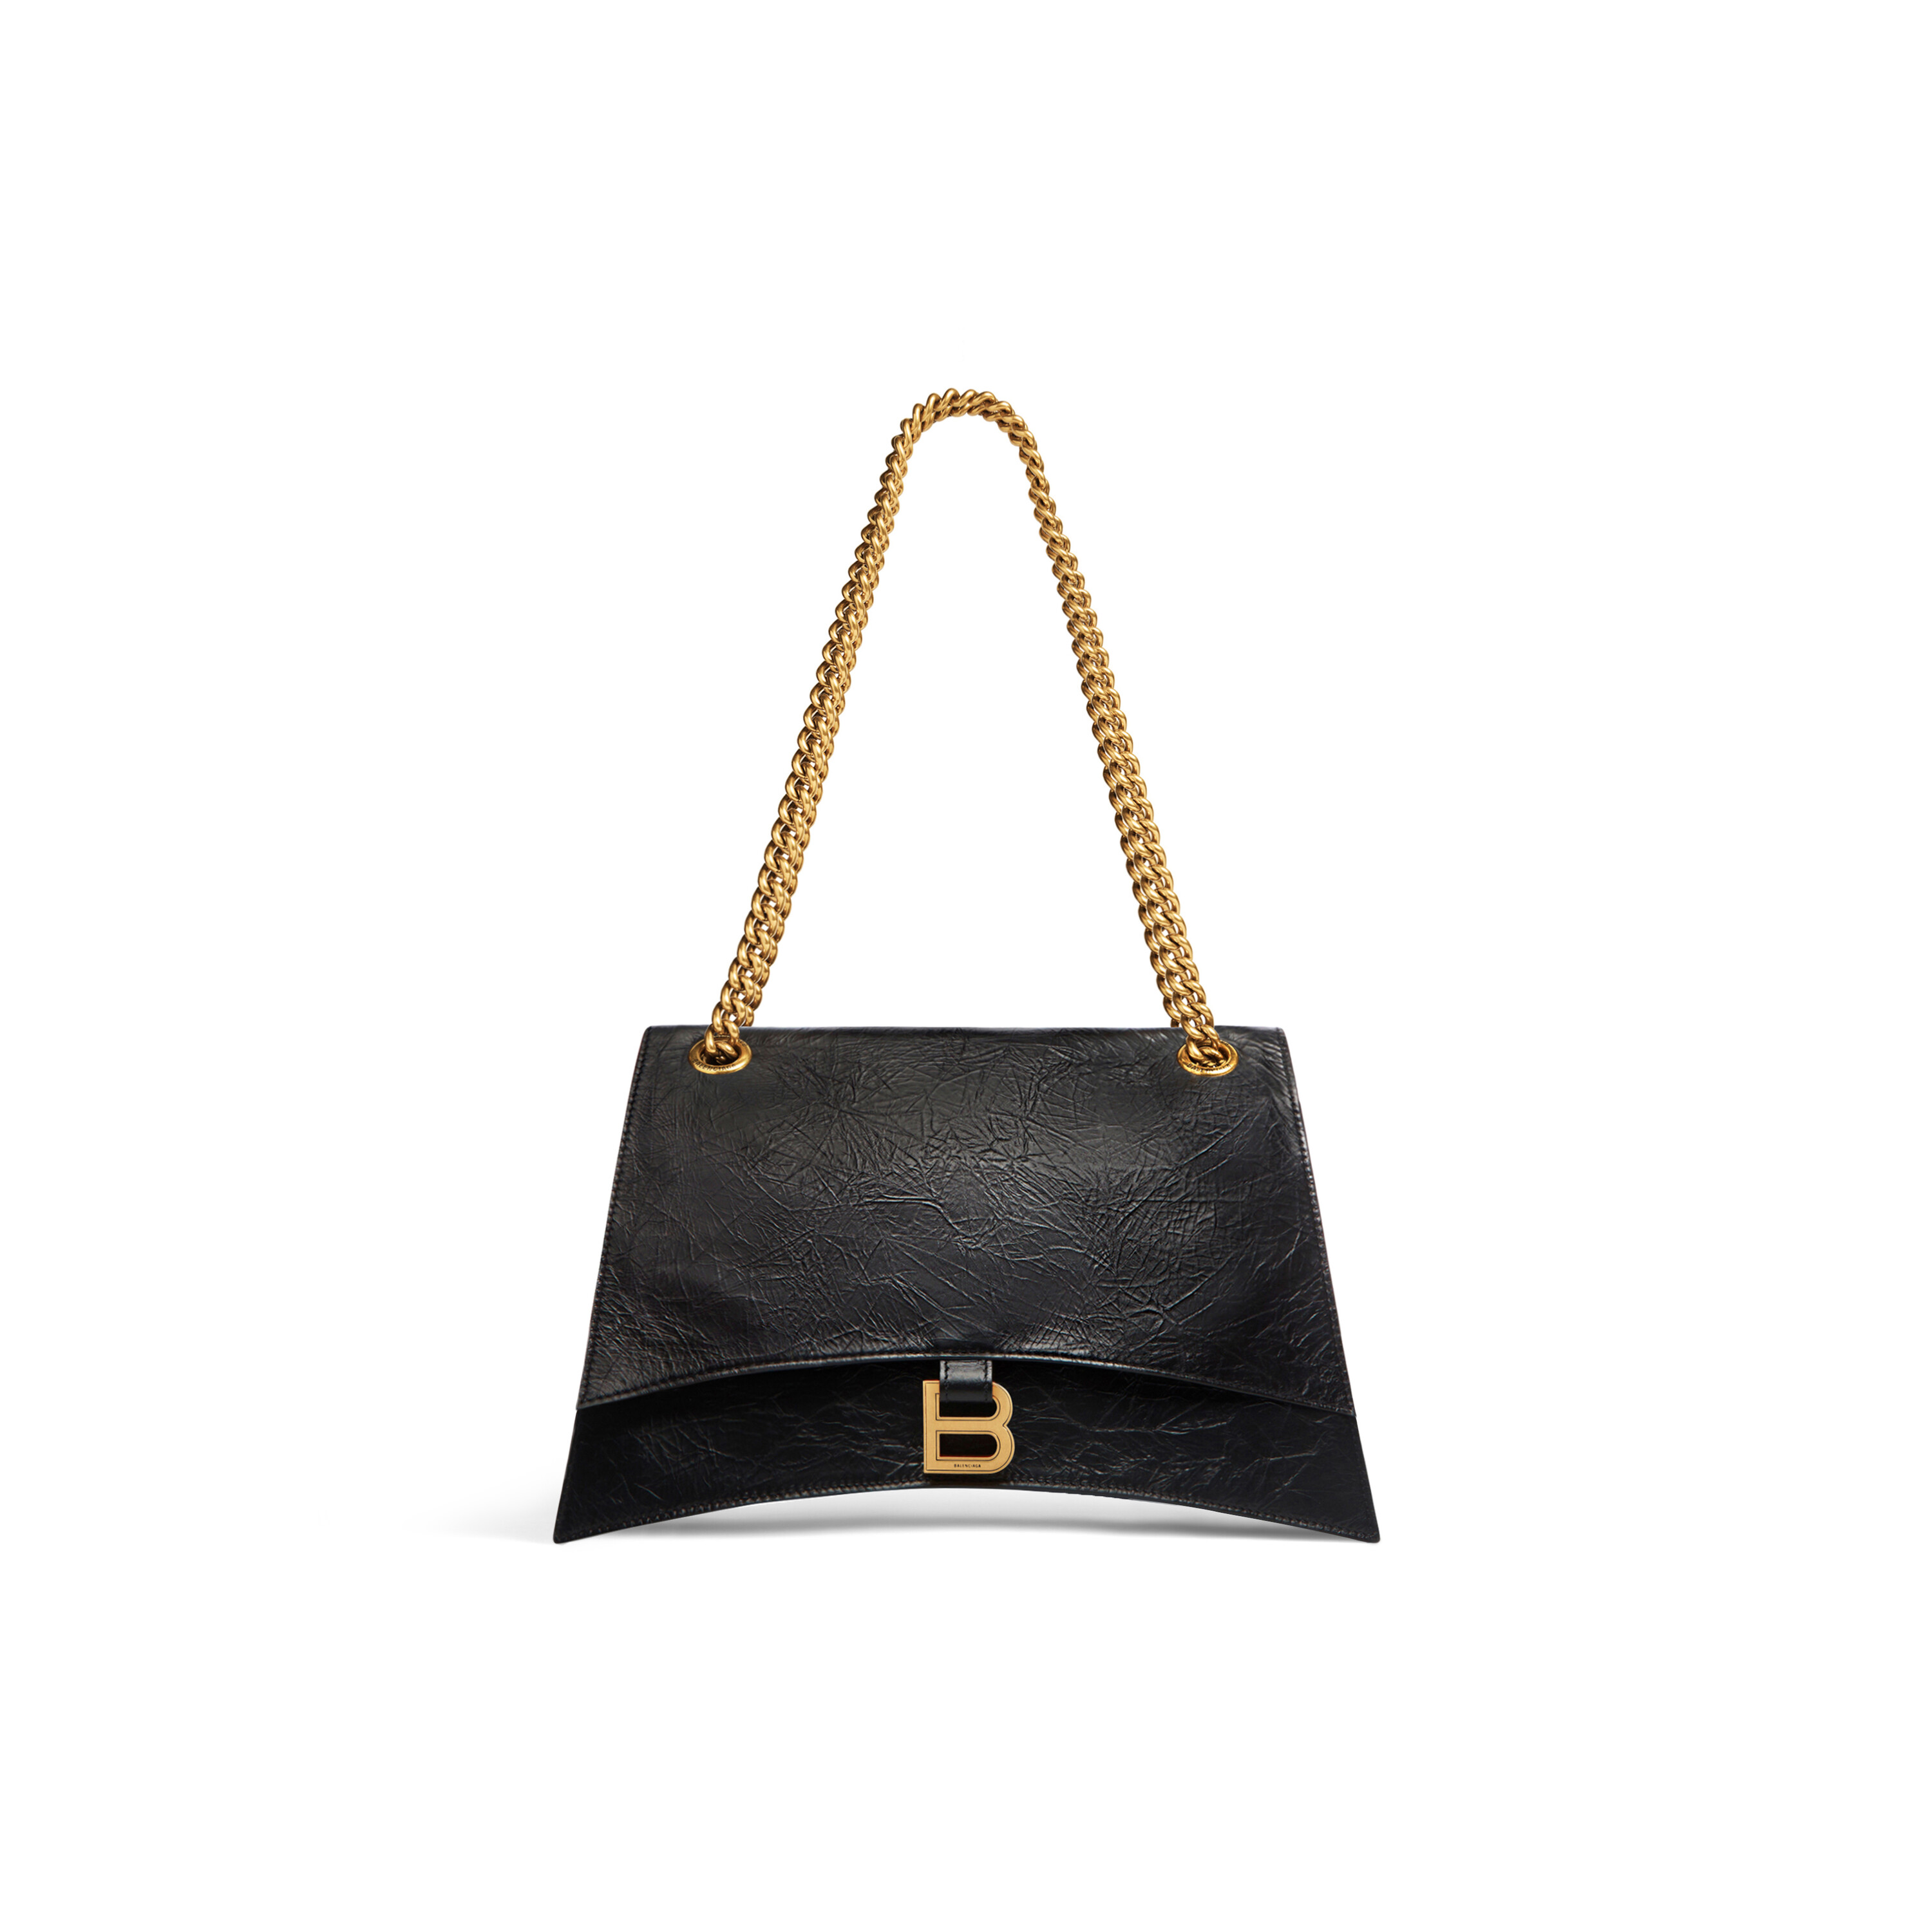 Balenciaga Womens Black/Silver Soft Medium Leather Shoulder Bag